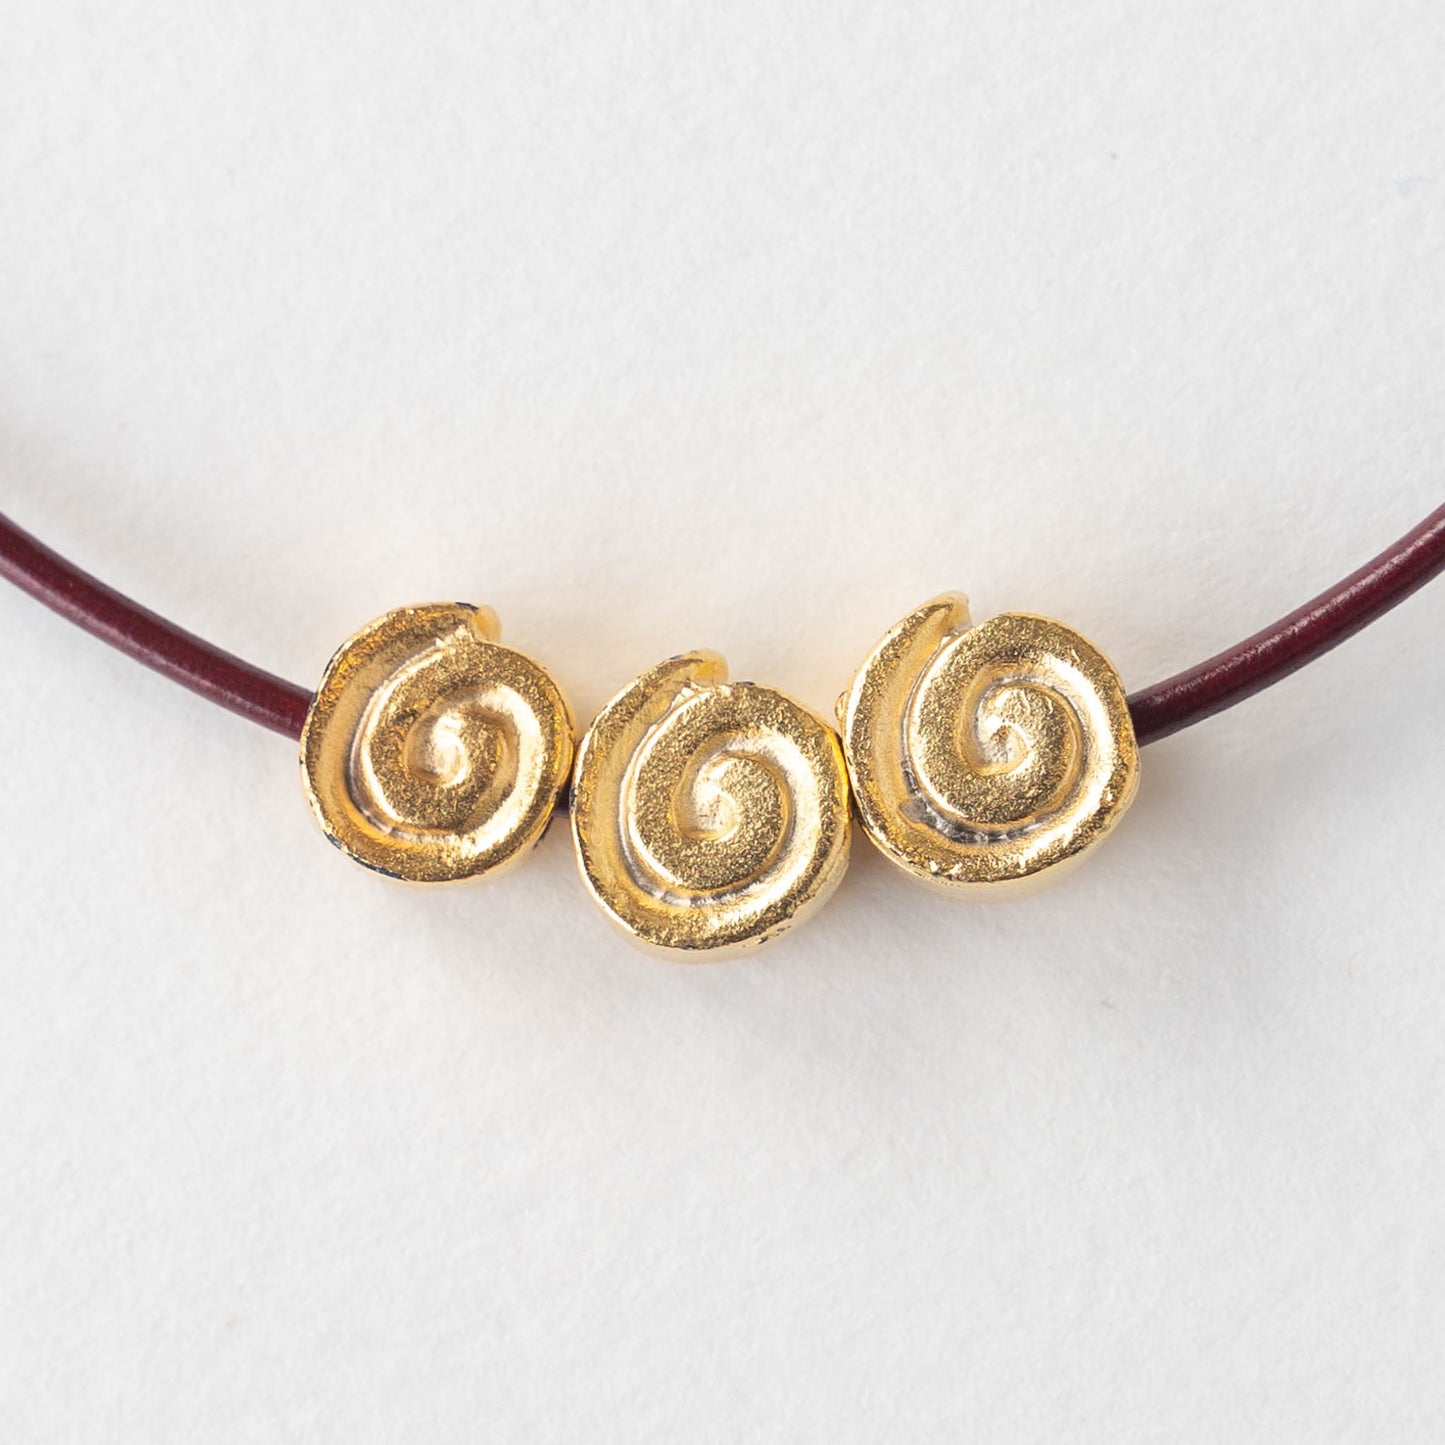 10mm Mykonos Spiral Beads - Gold - 4 or 12